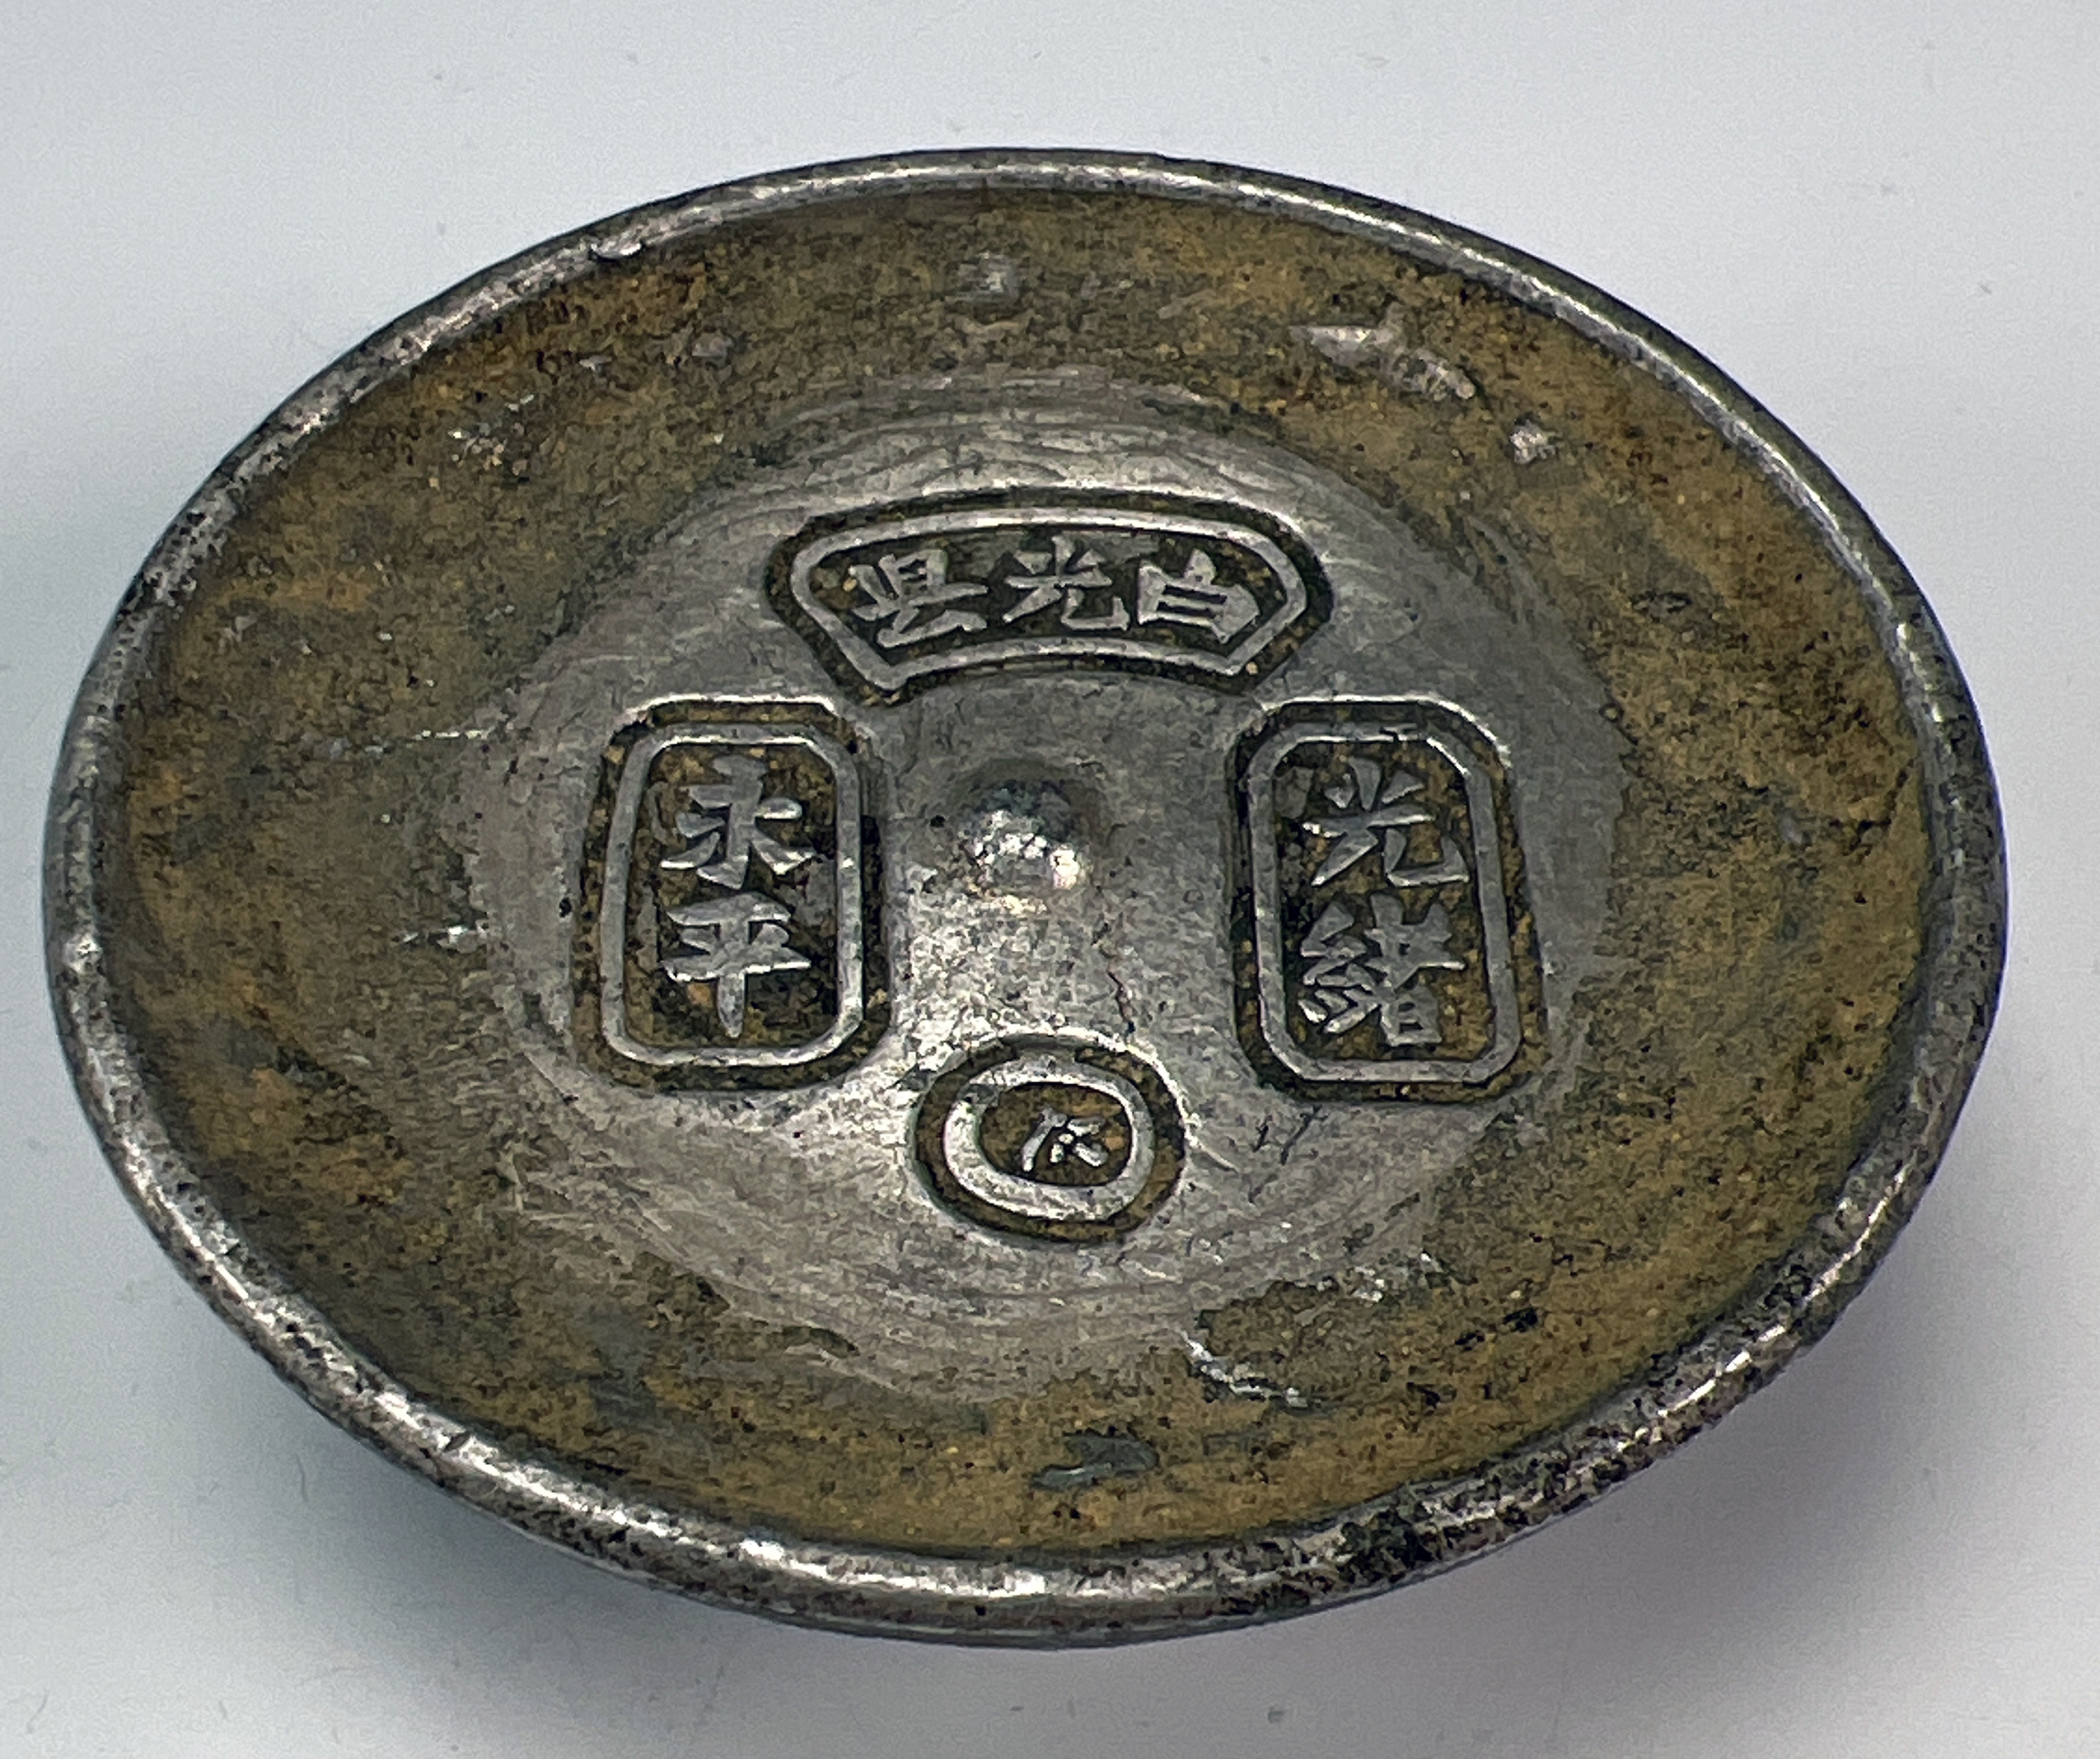 Vintage Chinese Silver-Tone Sycee Ingot image 1